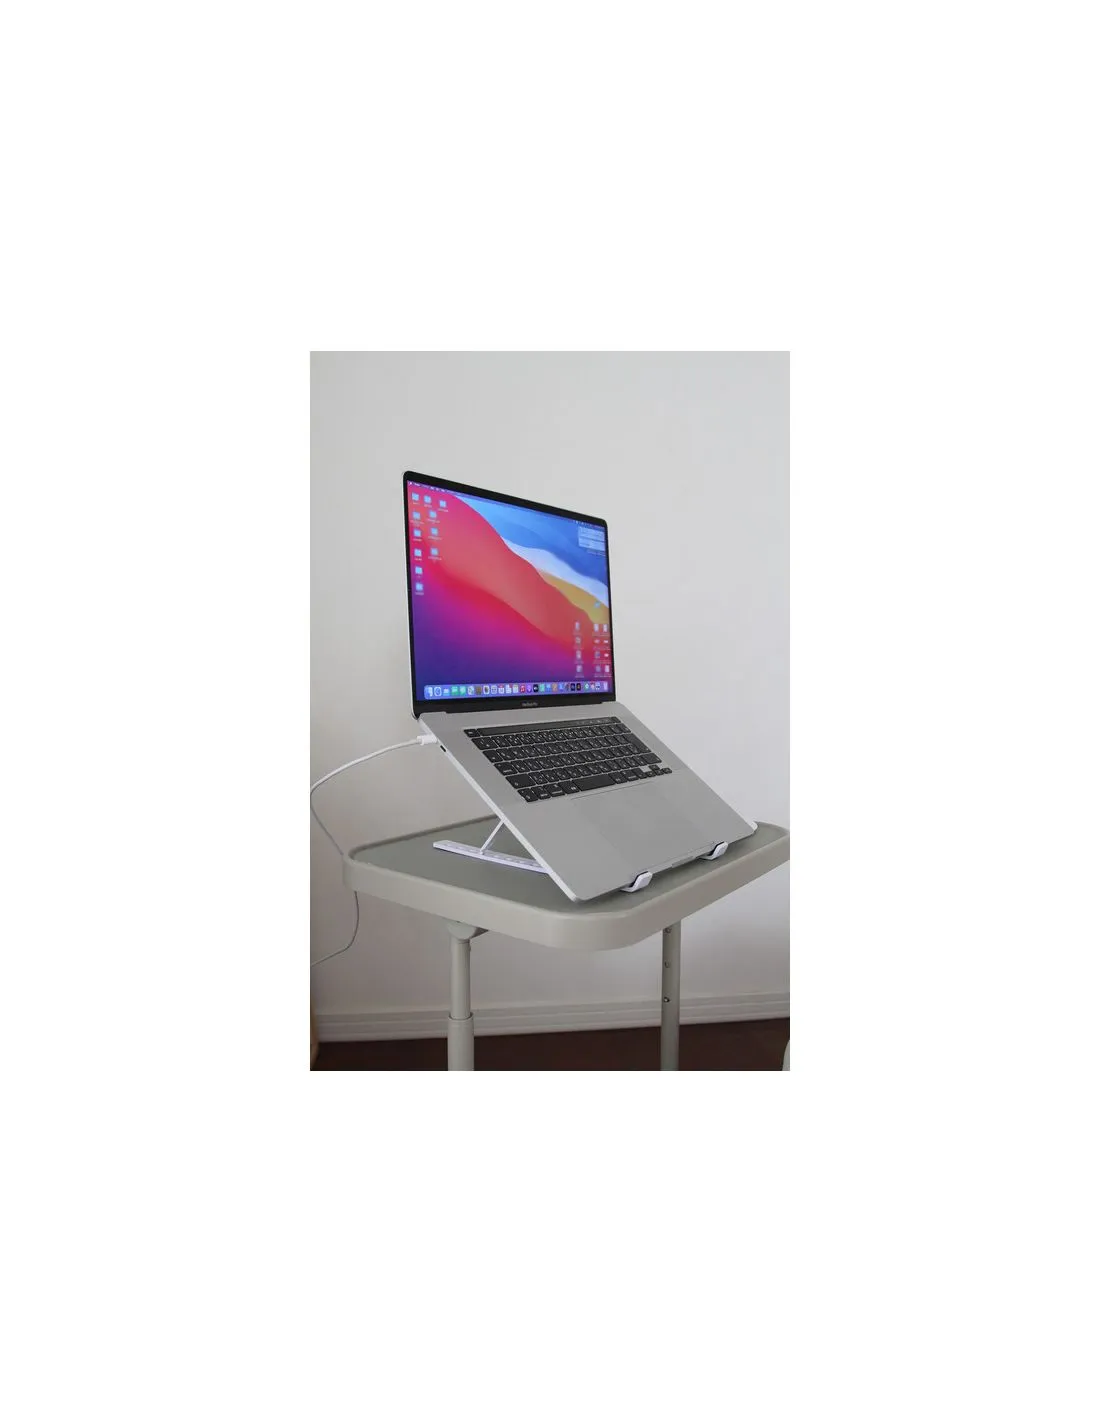 Suport 2 in 1 pentru laptop si tableta, suport laptop pliabil, suport laptop tip acordeon Elastix